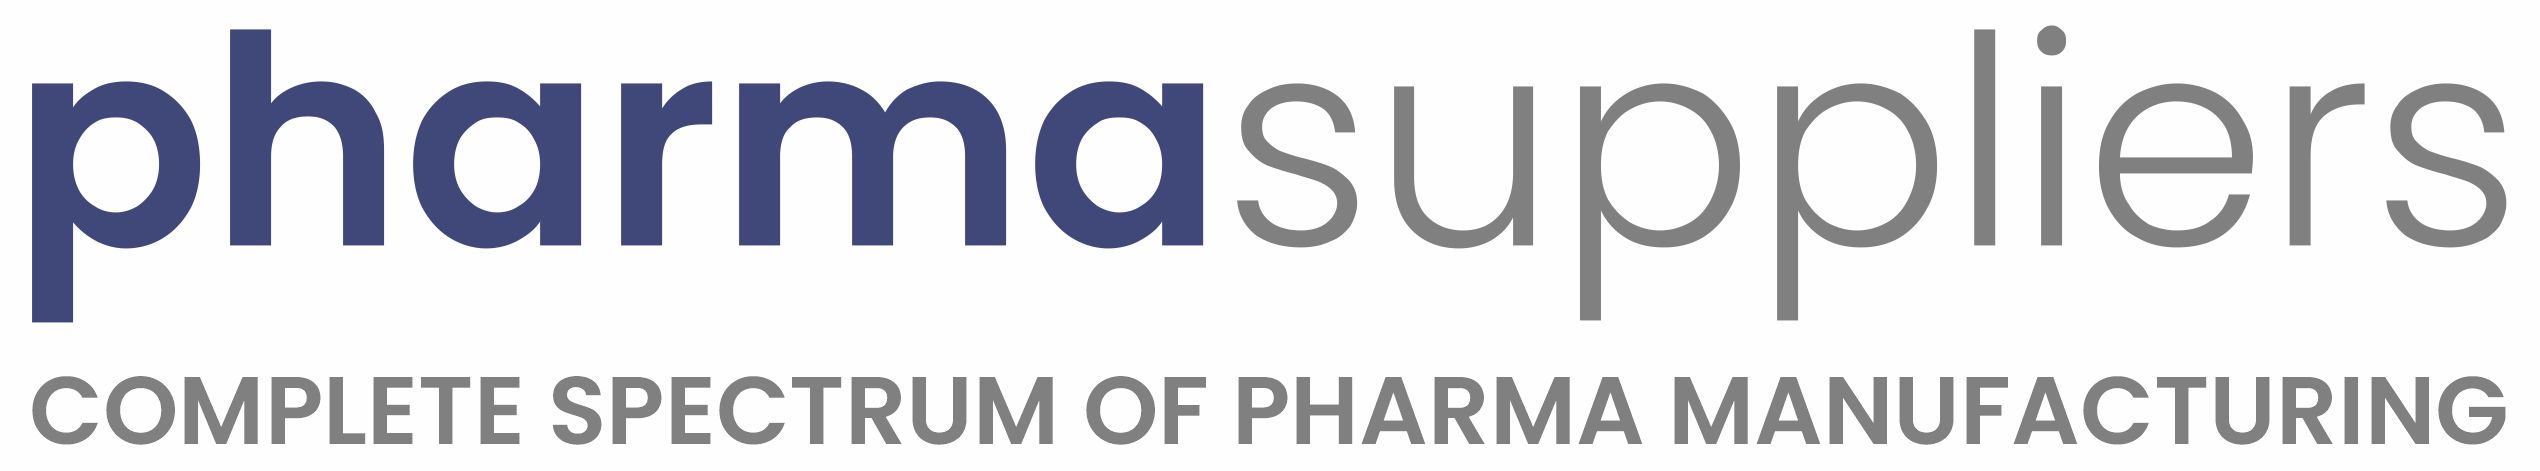 Pharma Suppliers Online Logo